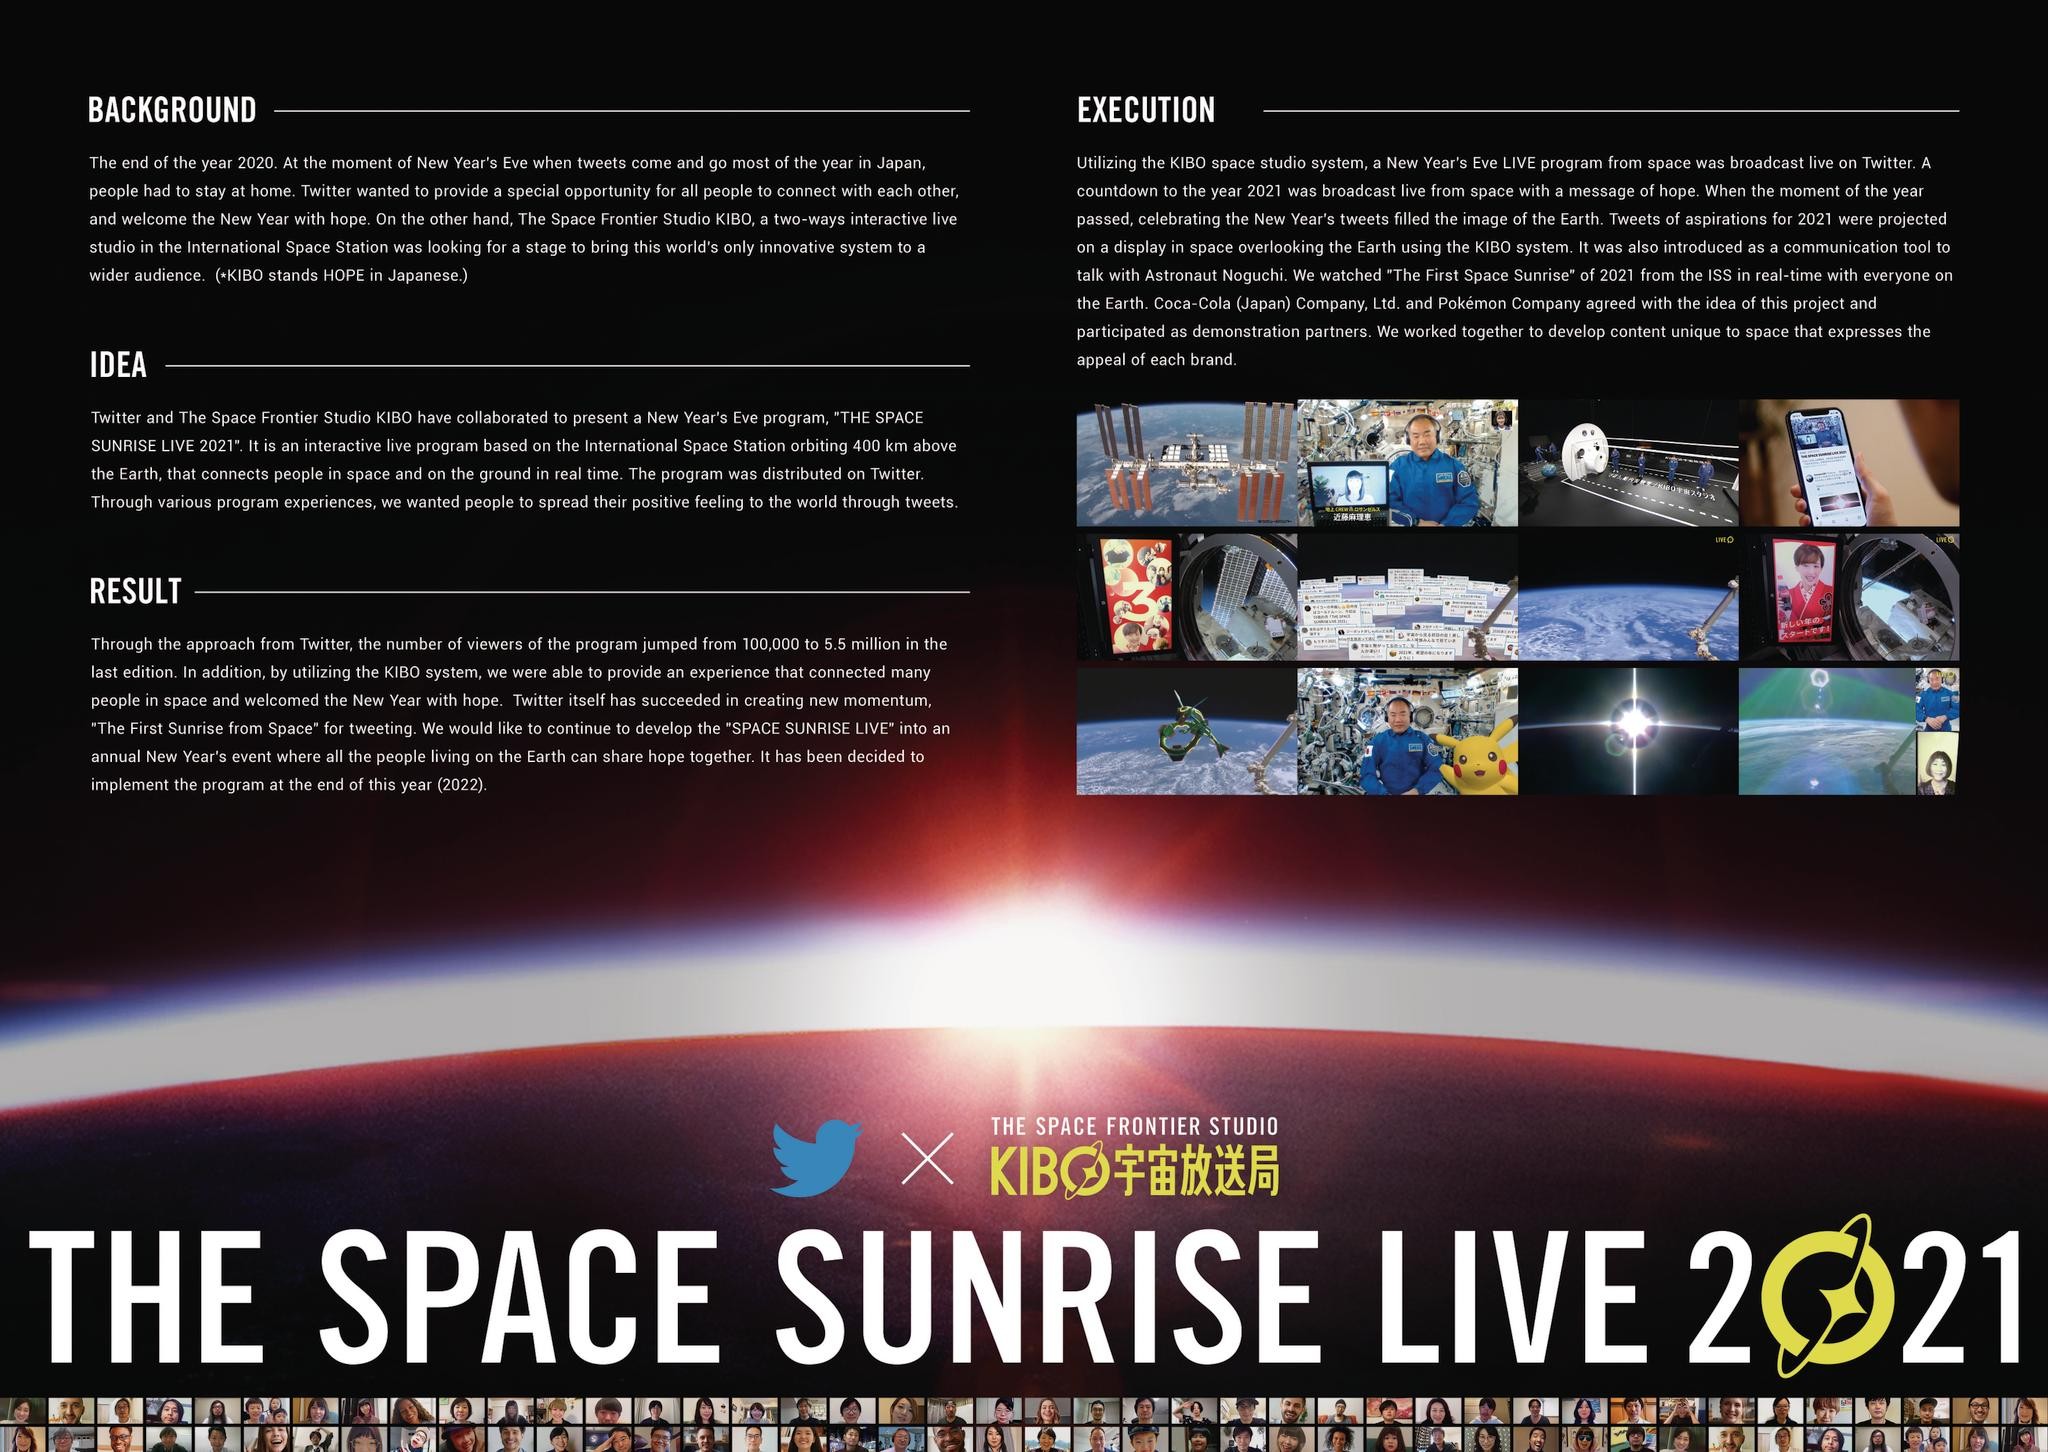 THE SPACE SUNRISE LIVE 2021